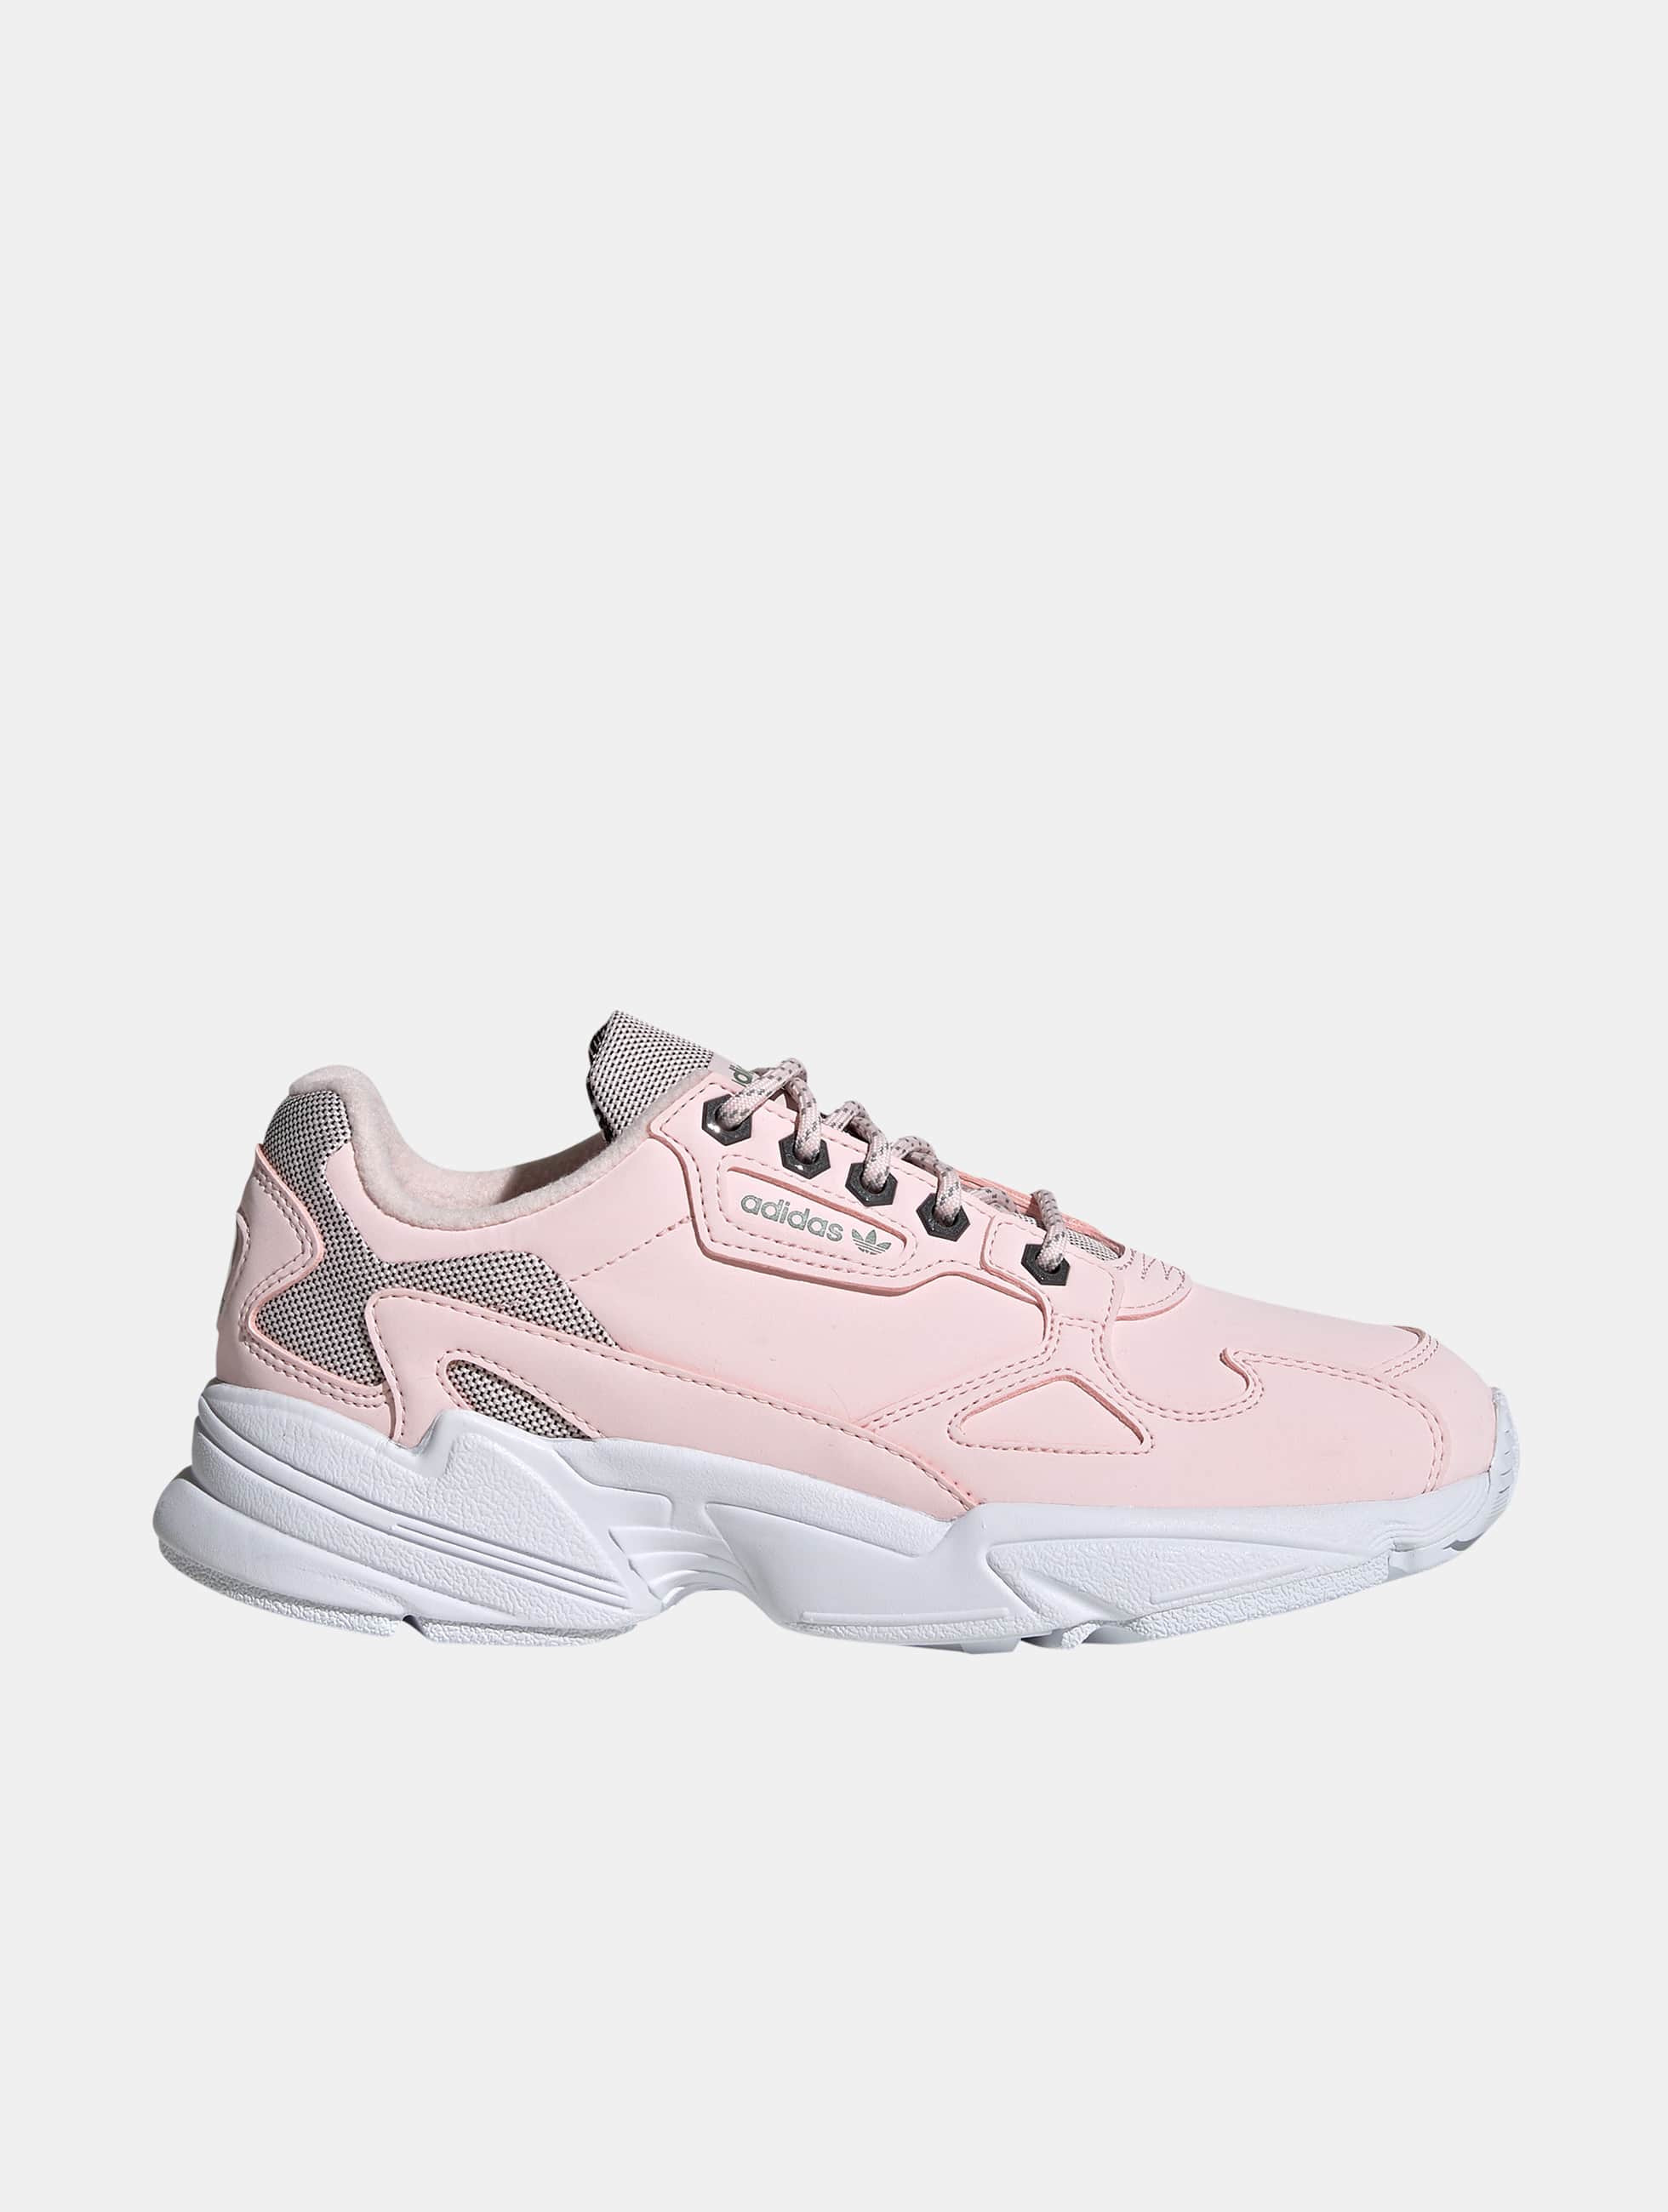 Jachtluipaard Controverse Samengesteld adidas Originals schoen / sneaker Falcon in pink 748377